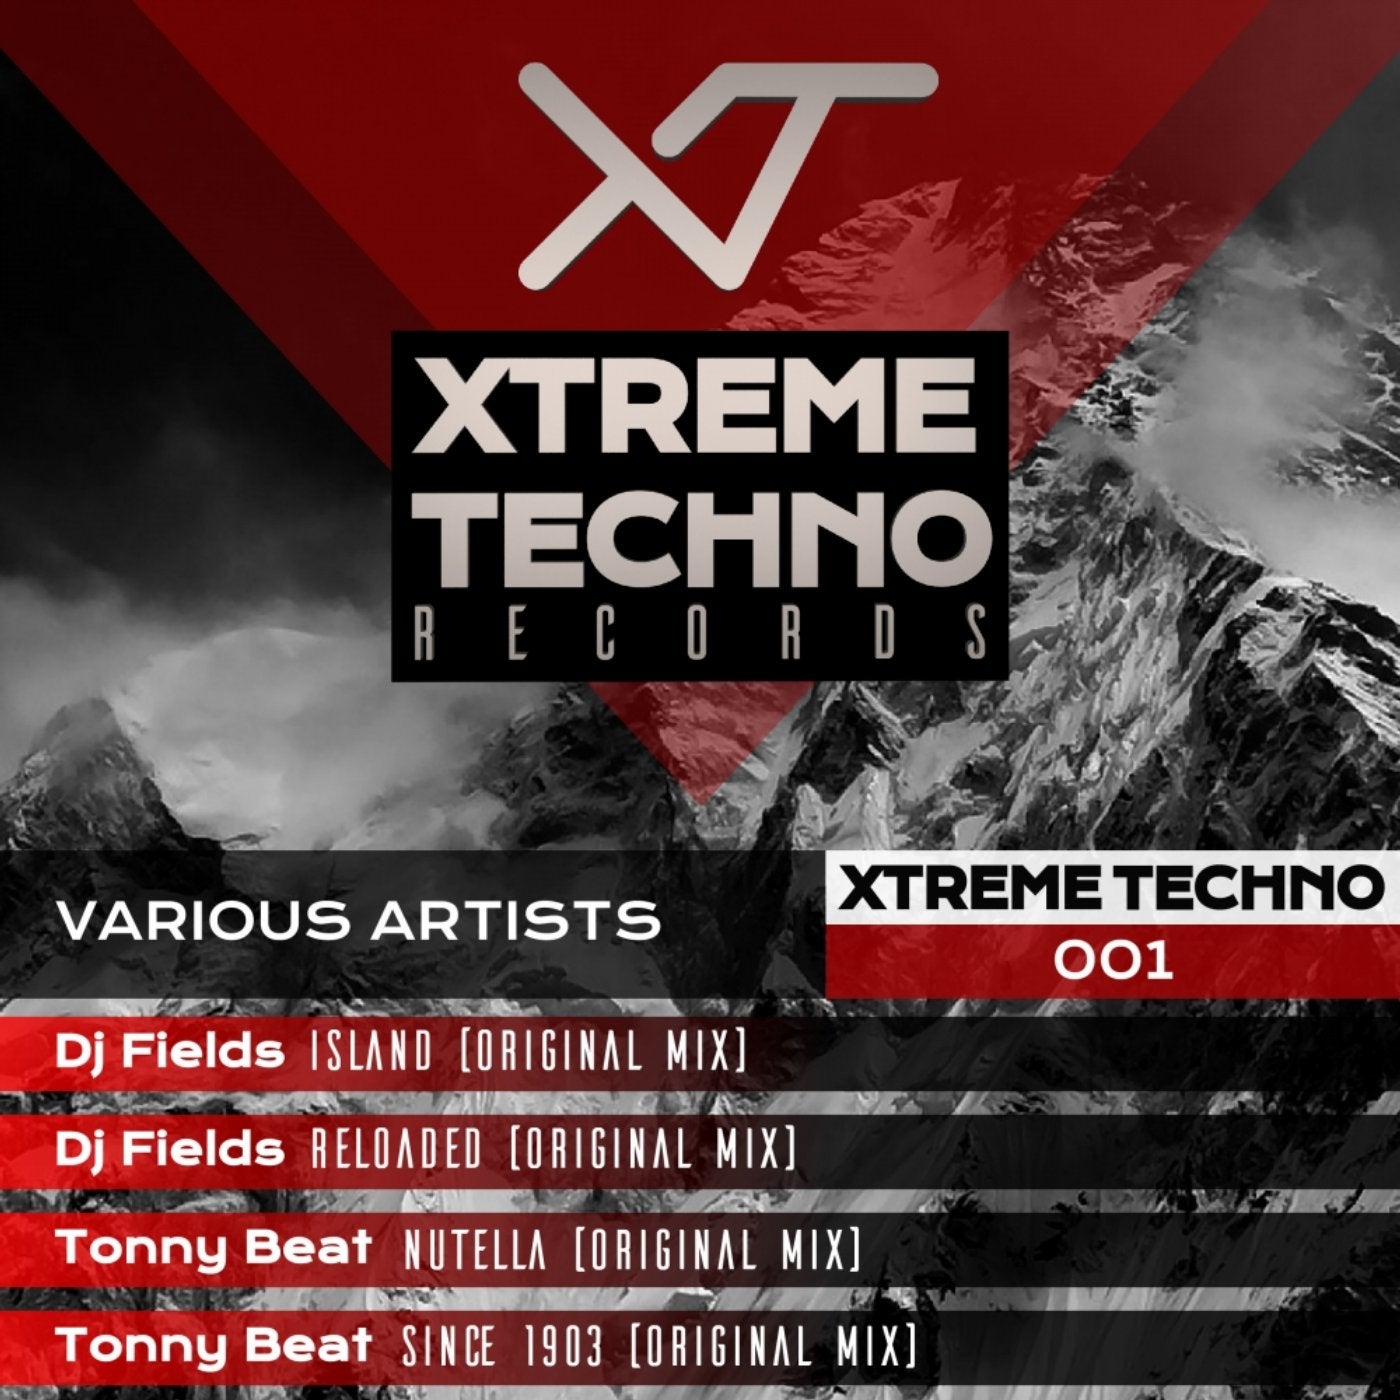 Xtreme Techno Digital Series 001